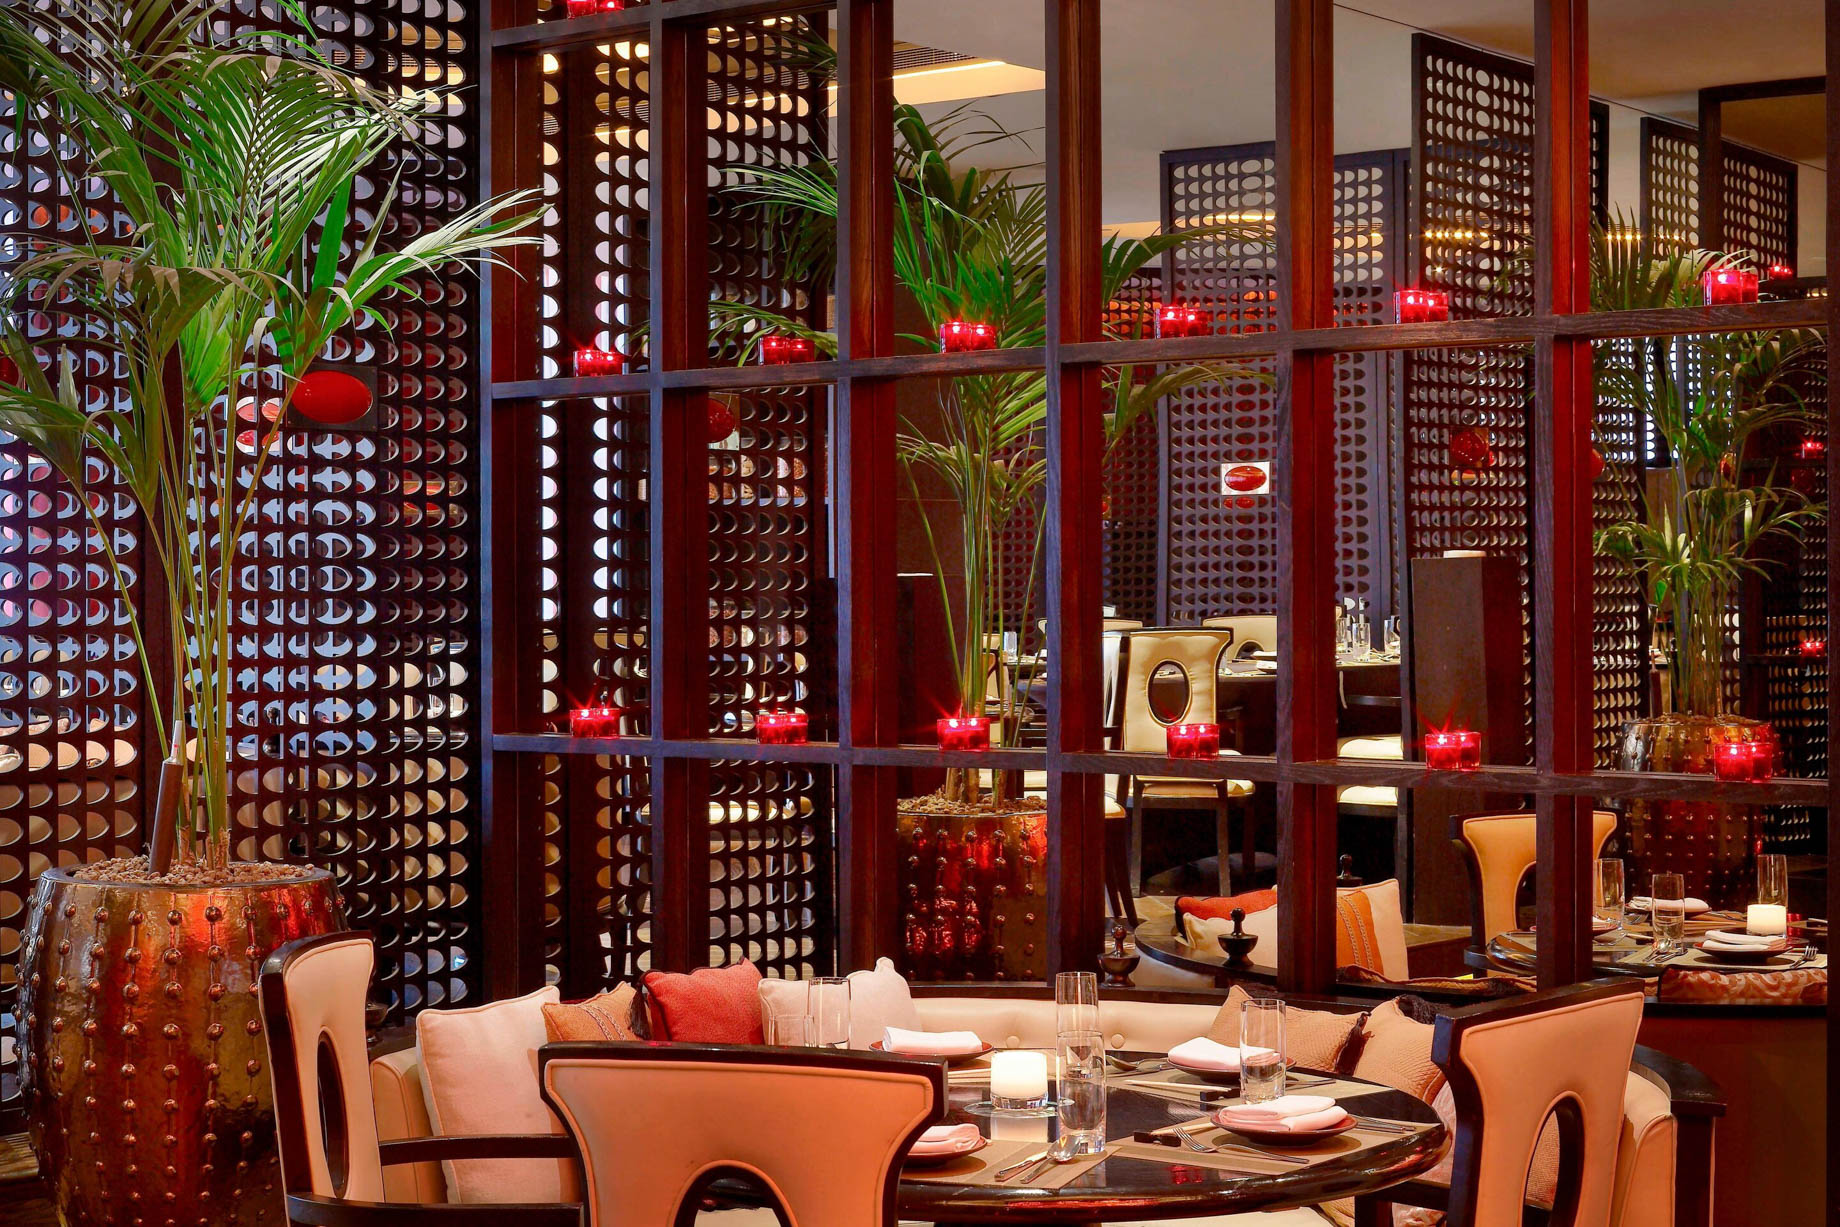 W Doha Hotel – Doha, Qatar – Spice Market Restaurant Interior Decor